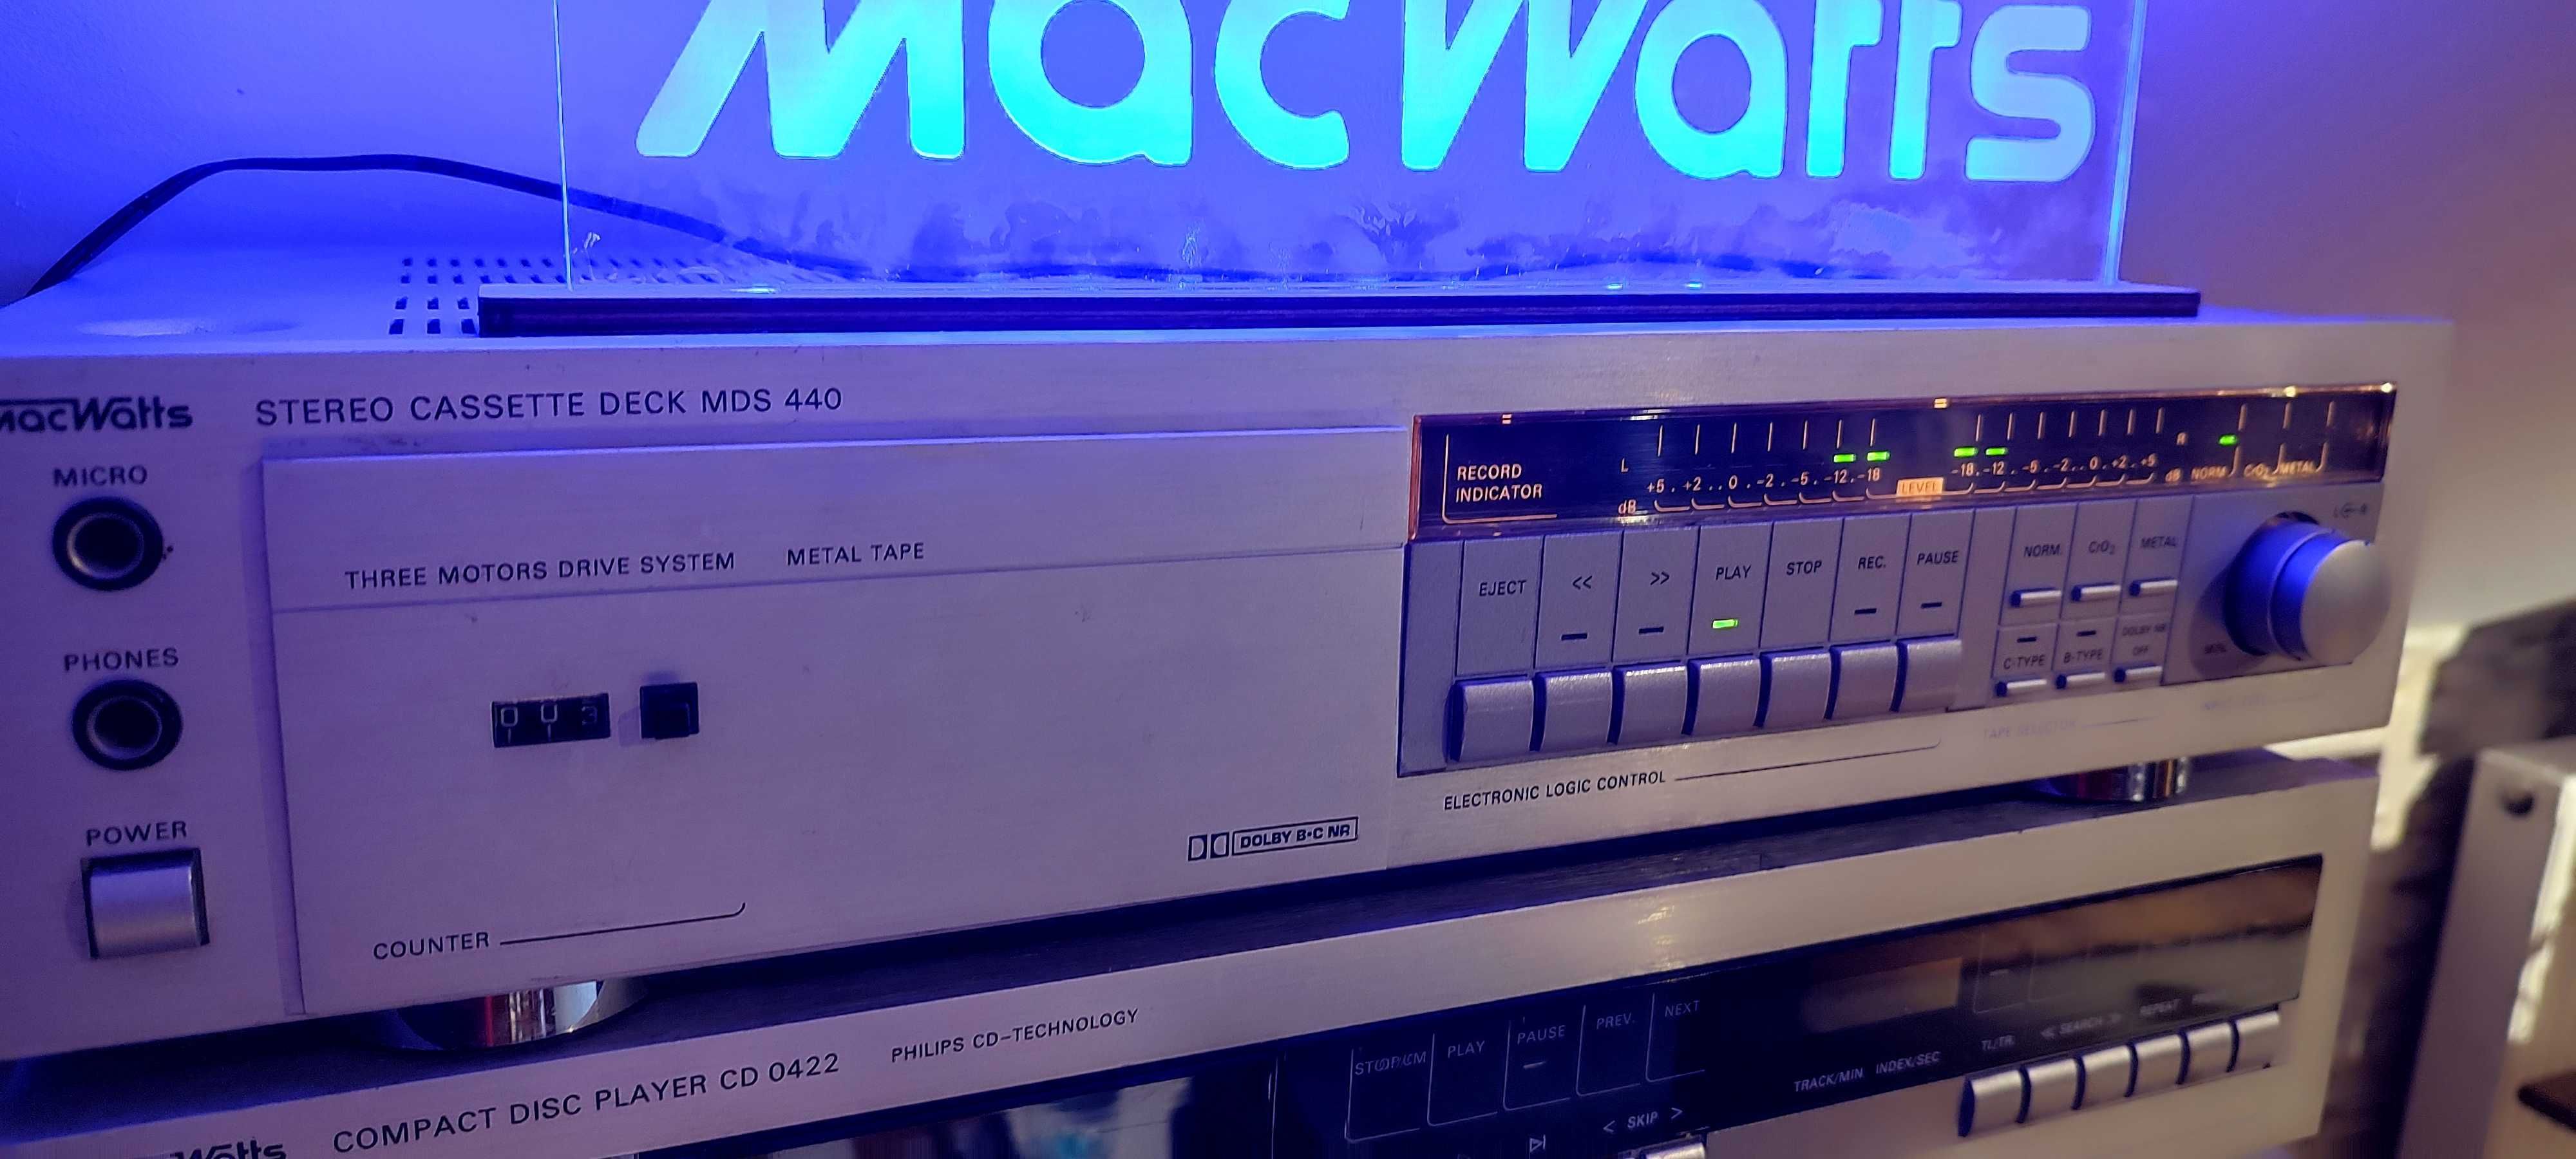 MacWatts deck szuflada MDS 440